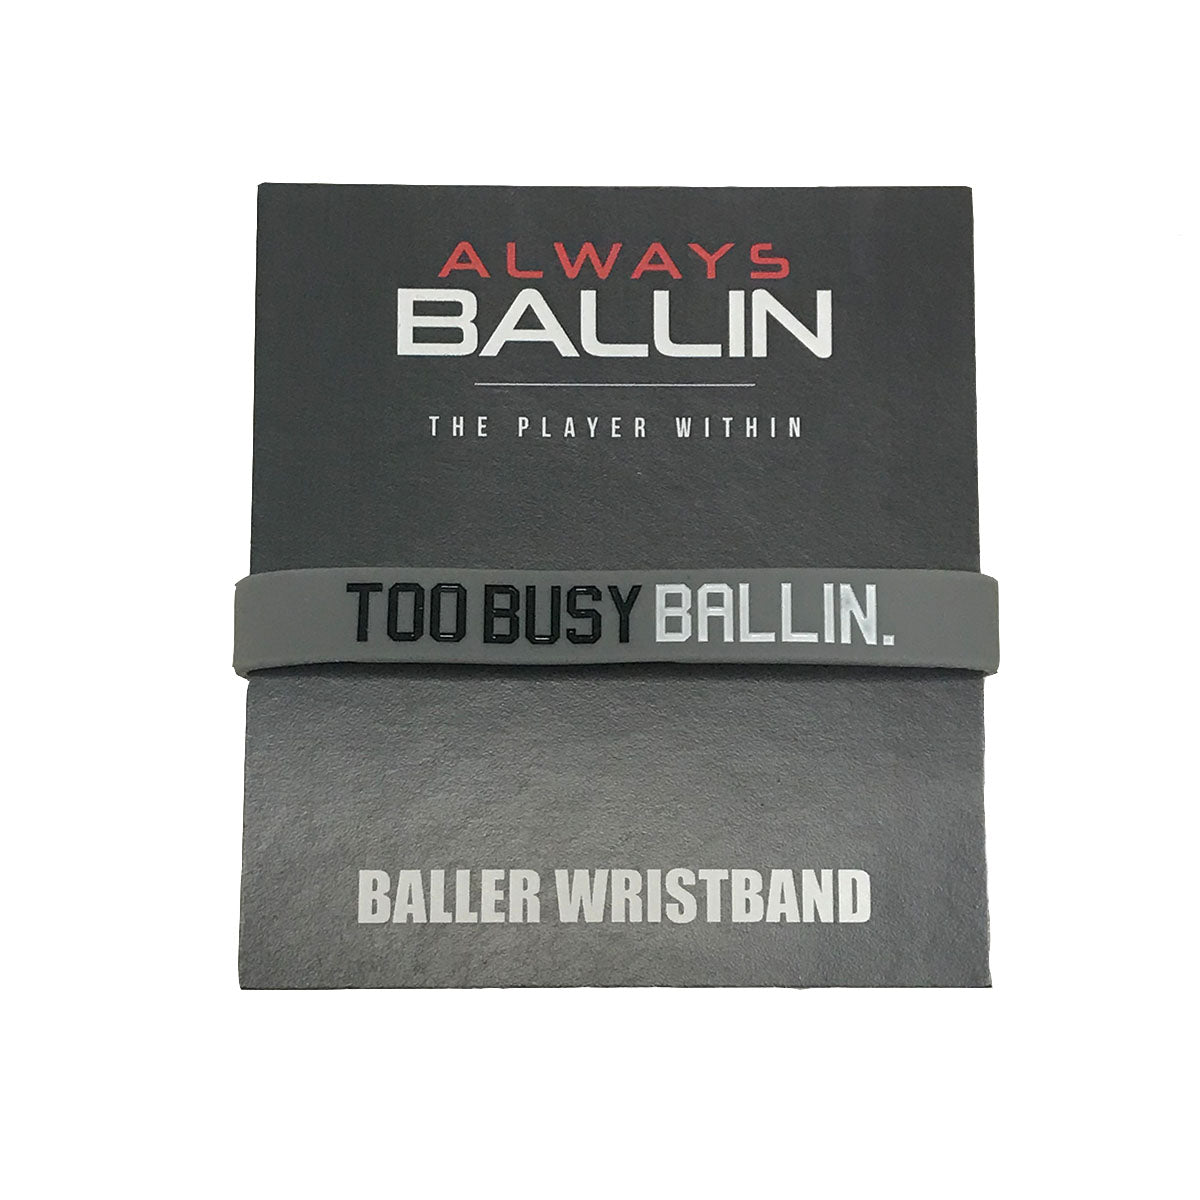 Always ballin too busy ballin Wristband grey OS